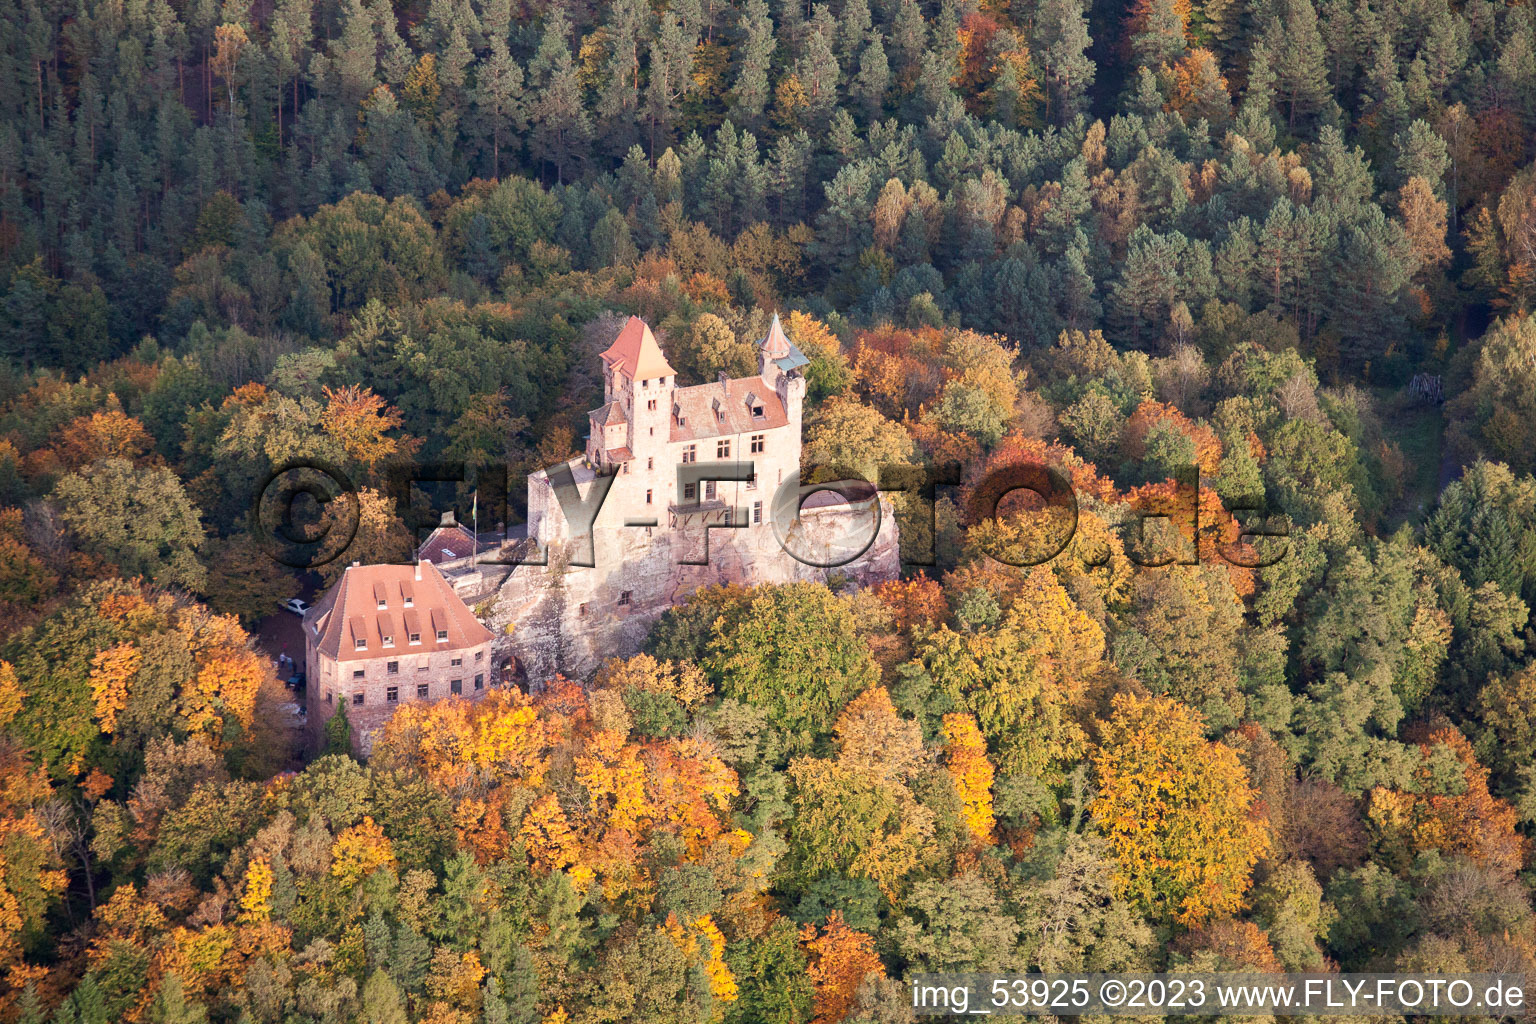 Aerial view of Berwartstein Castle in Erlenbach bei Dahn in the state Rhineland-Palatinate, Germany